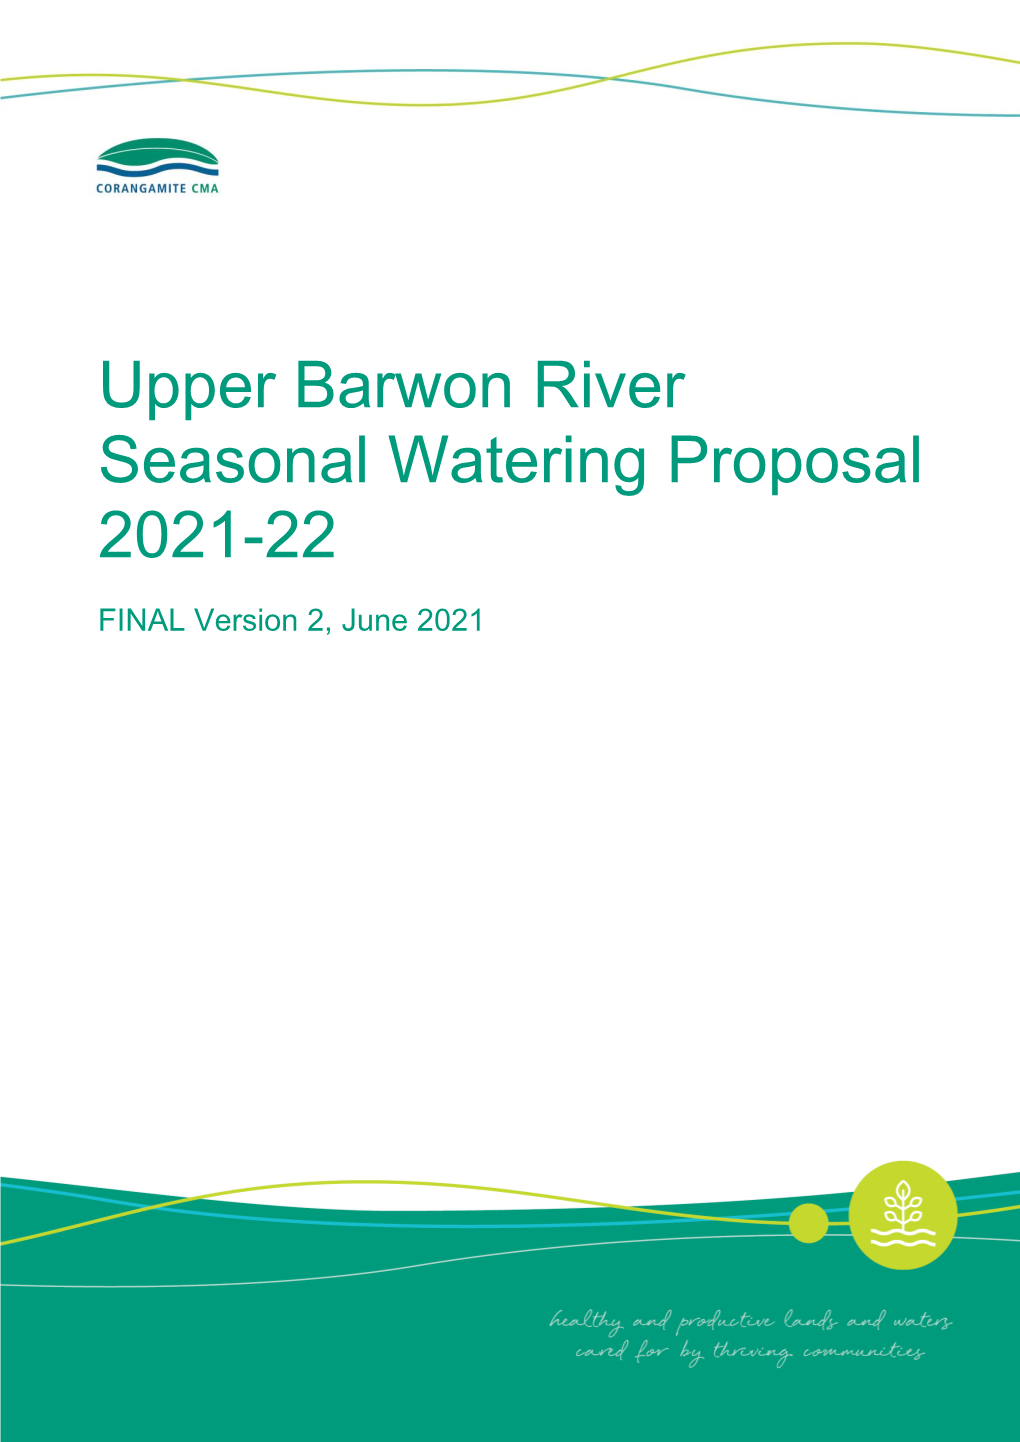 Upper Barwon River Seasonal Watering Proposal 2020-21